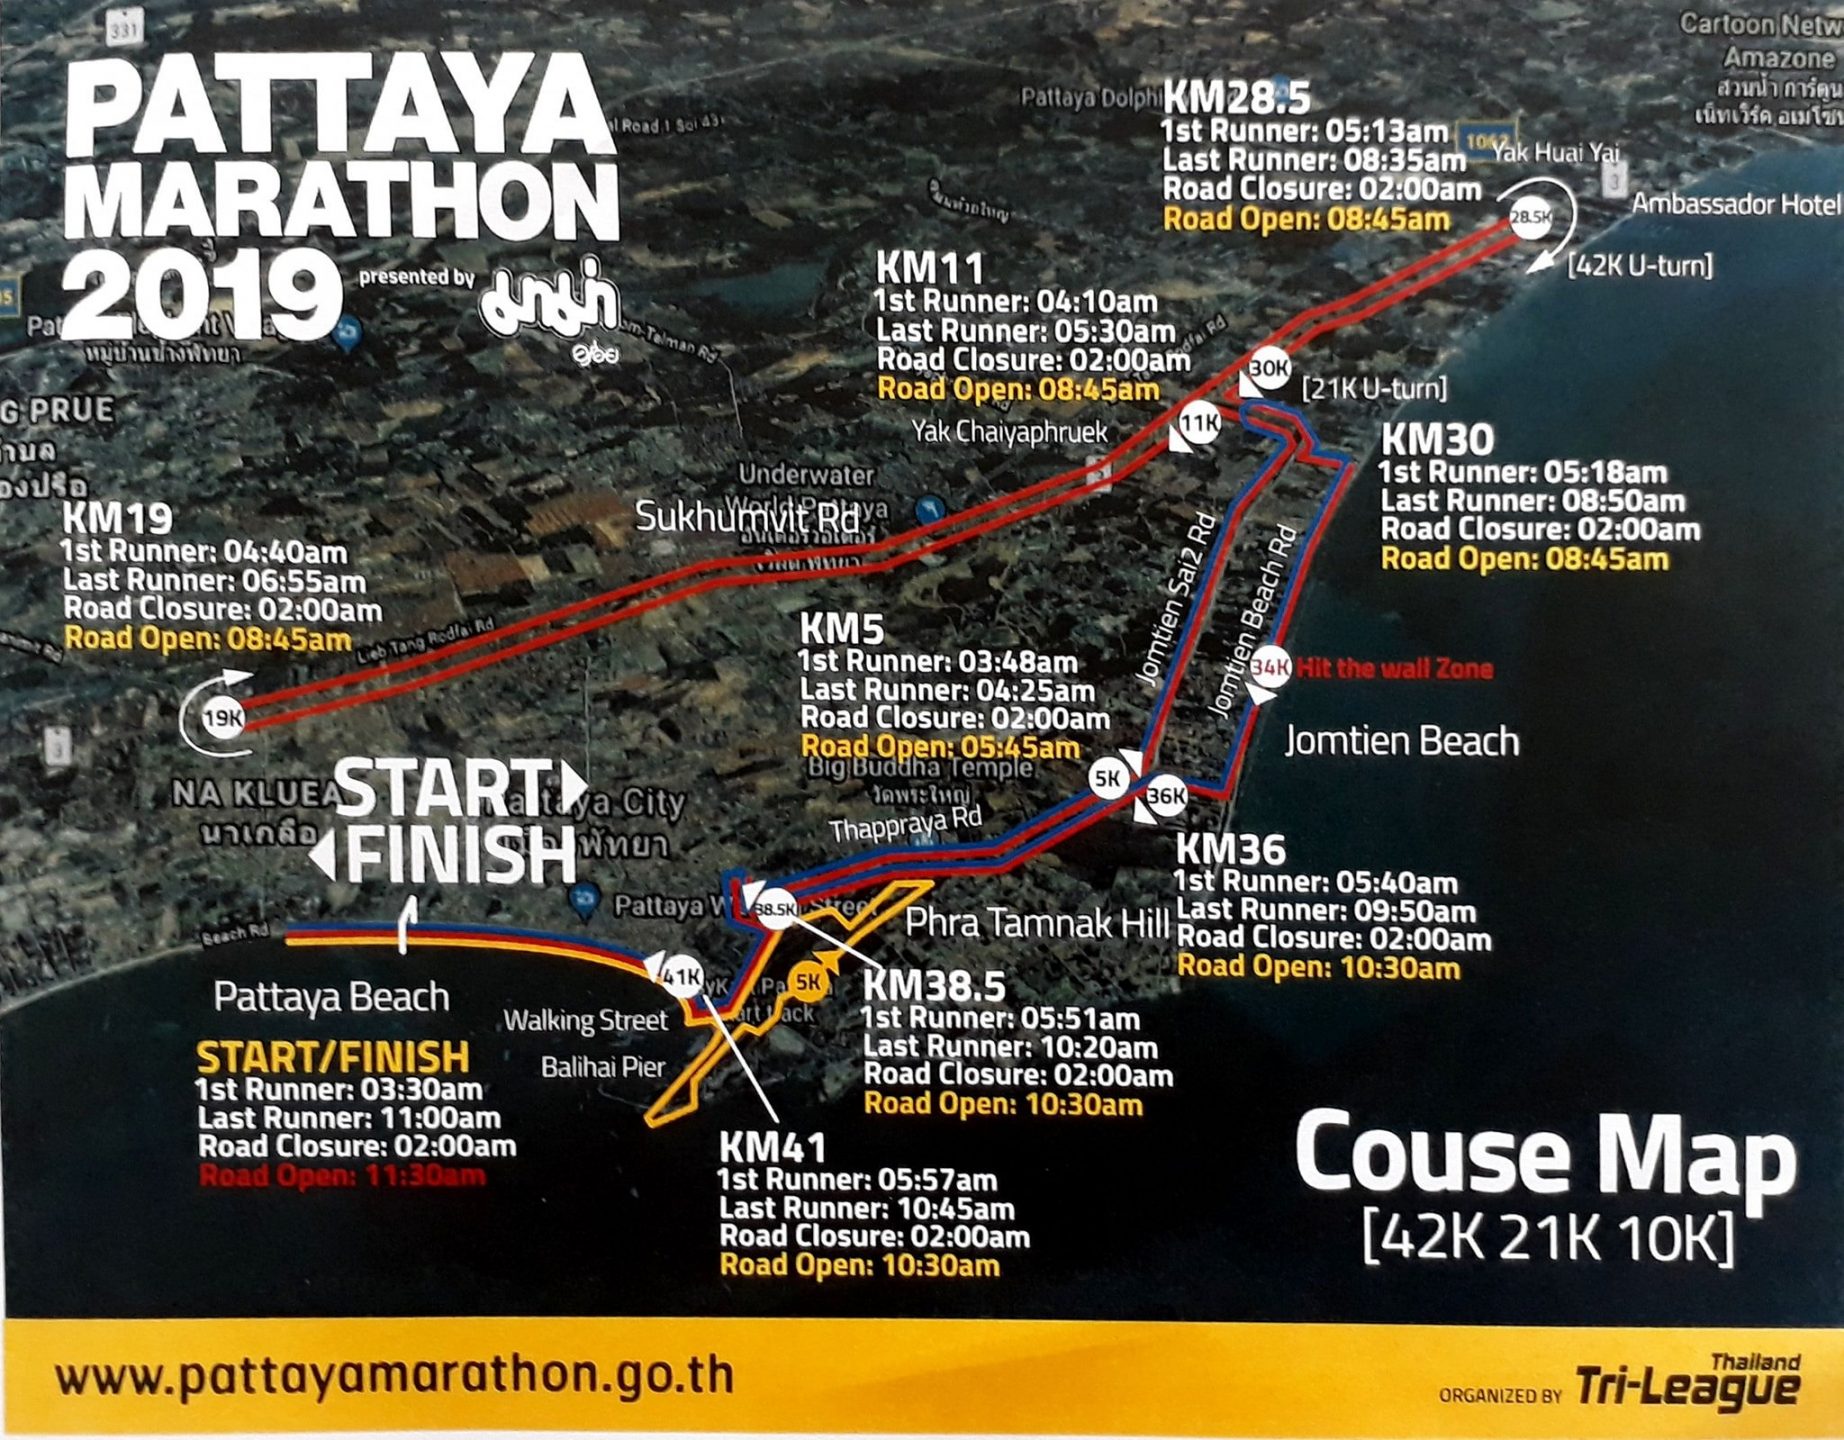 English Map of Pattaya Marathon route 2019, including road closures